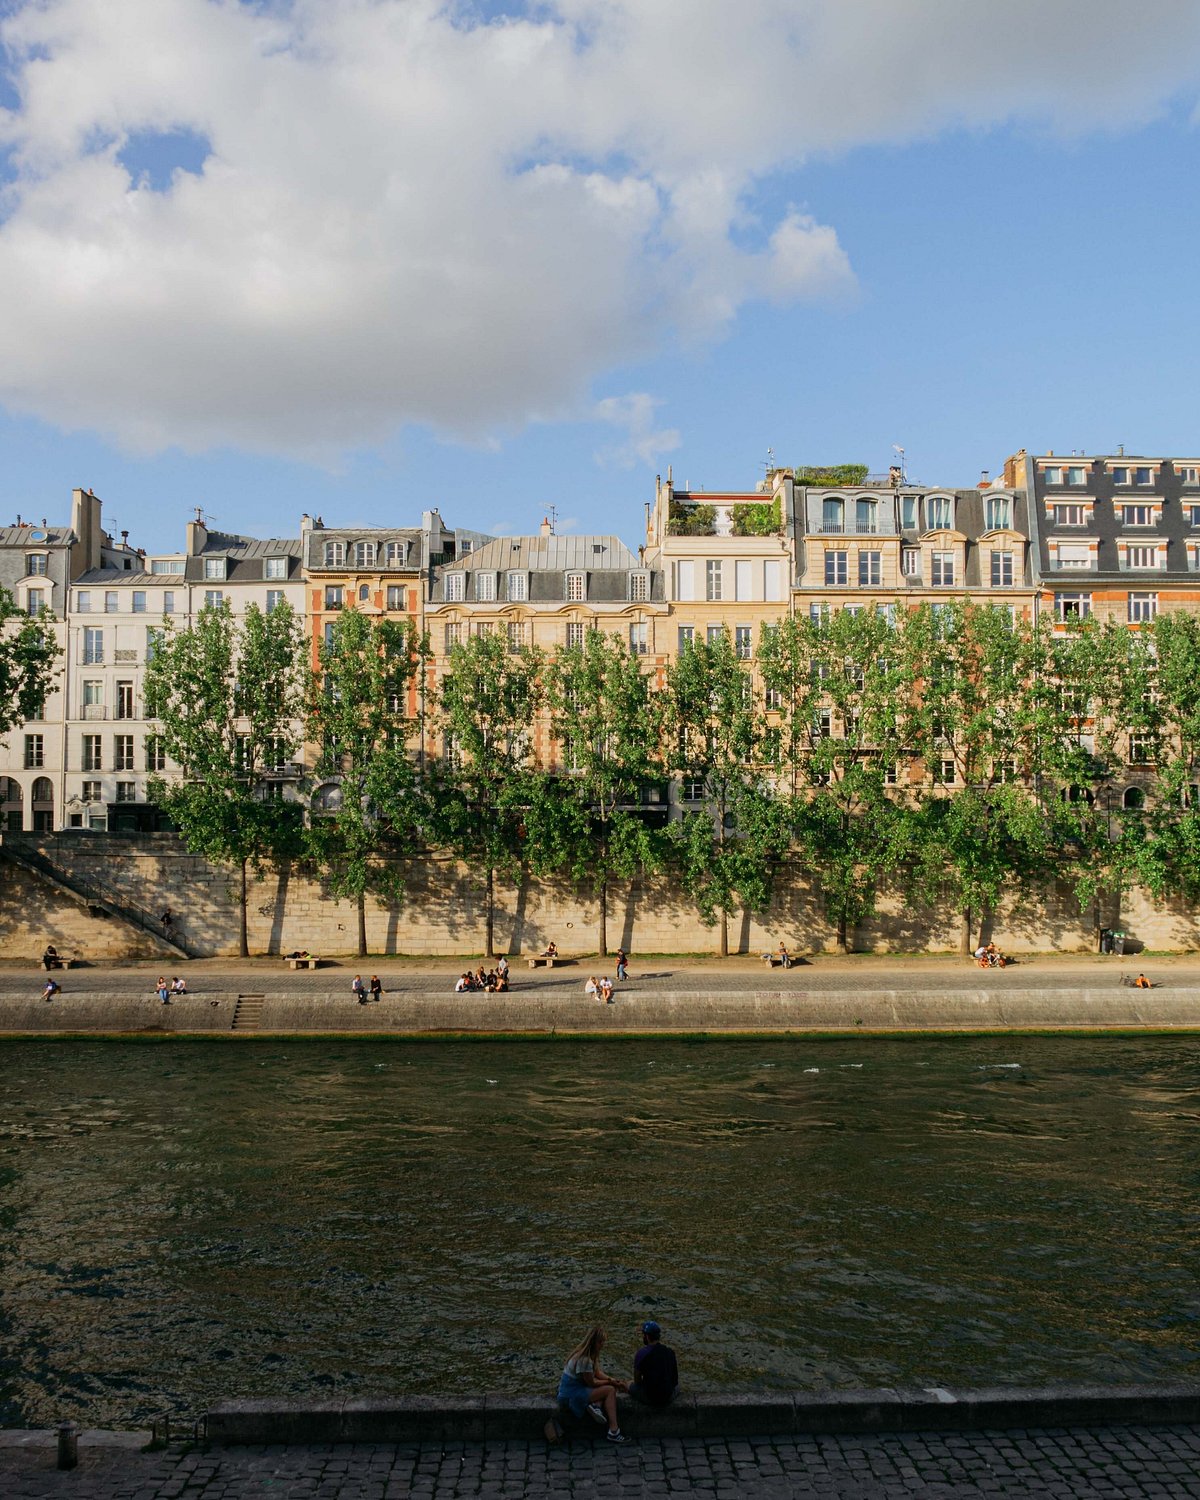 12 hotels in Paris with the best Eiffel Tower views - Tripadvisor